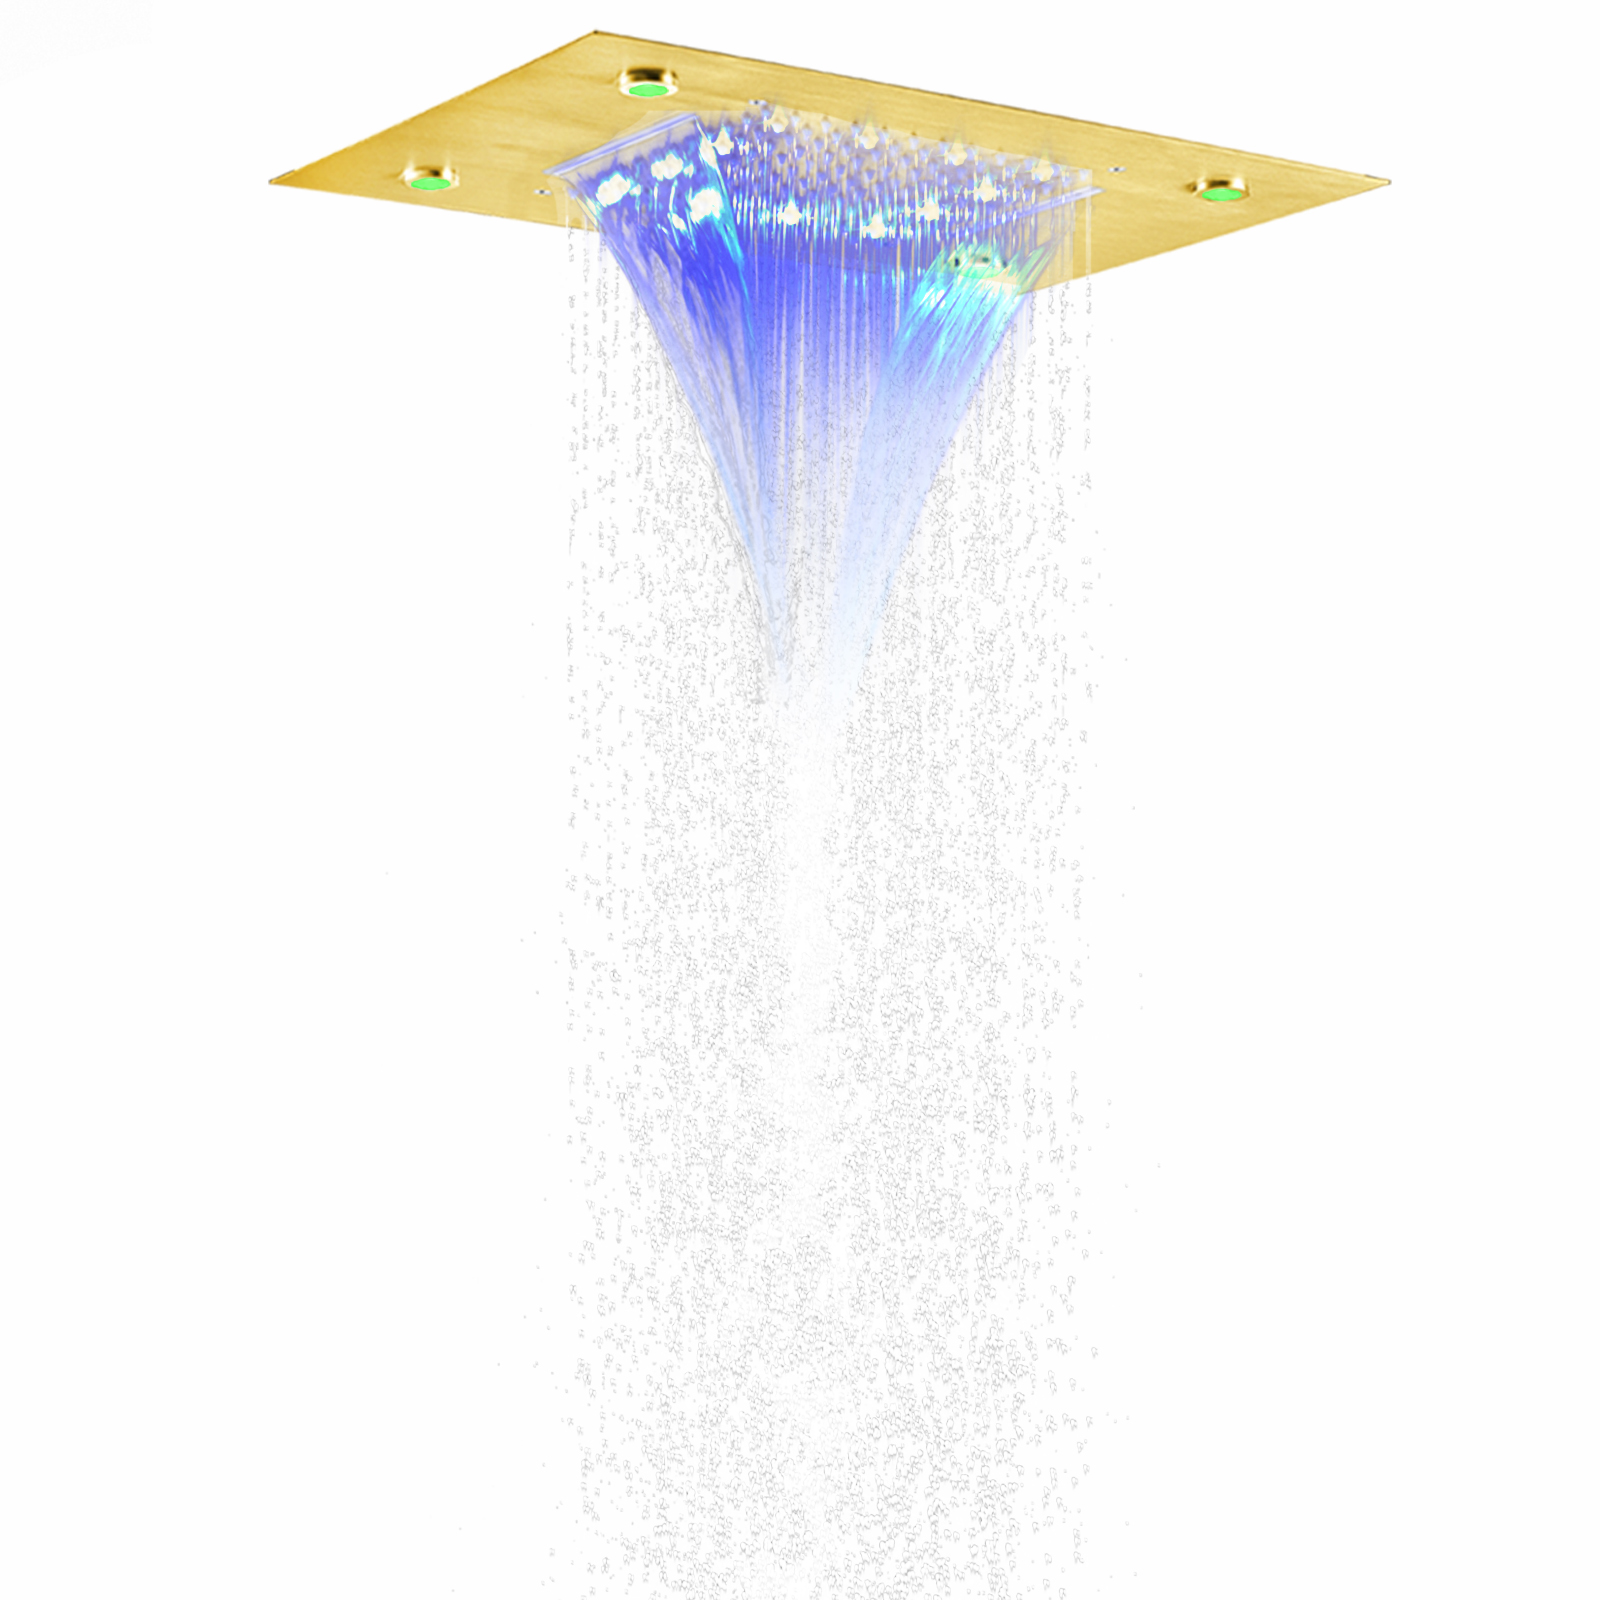 Cabezal de ducha cromado pulido 50X36 CM LED 7 colores baño empotrado techo bifuncional cascada lluvia